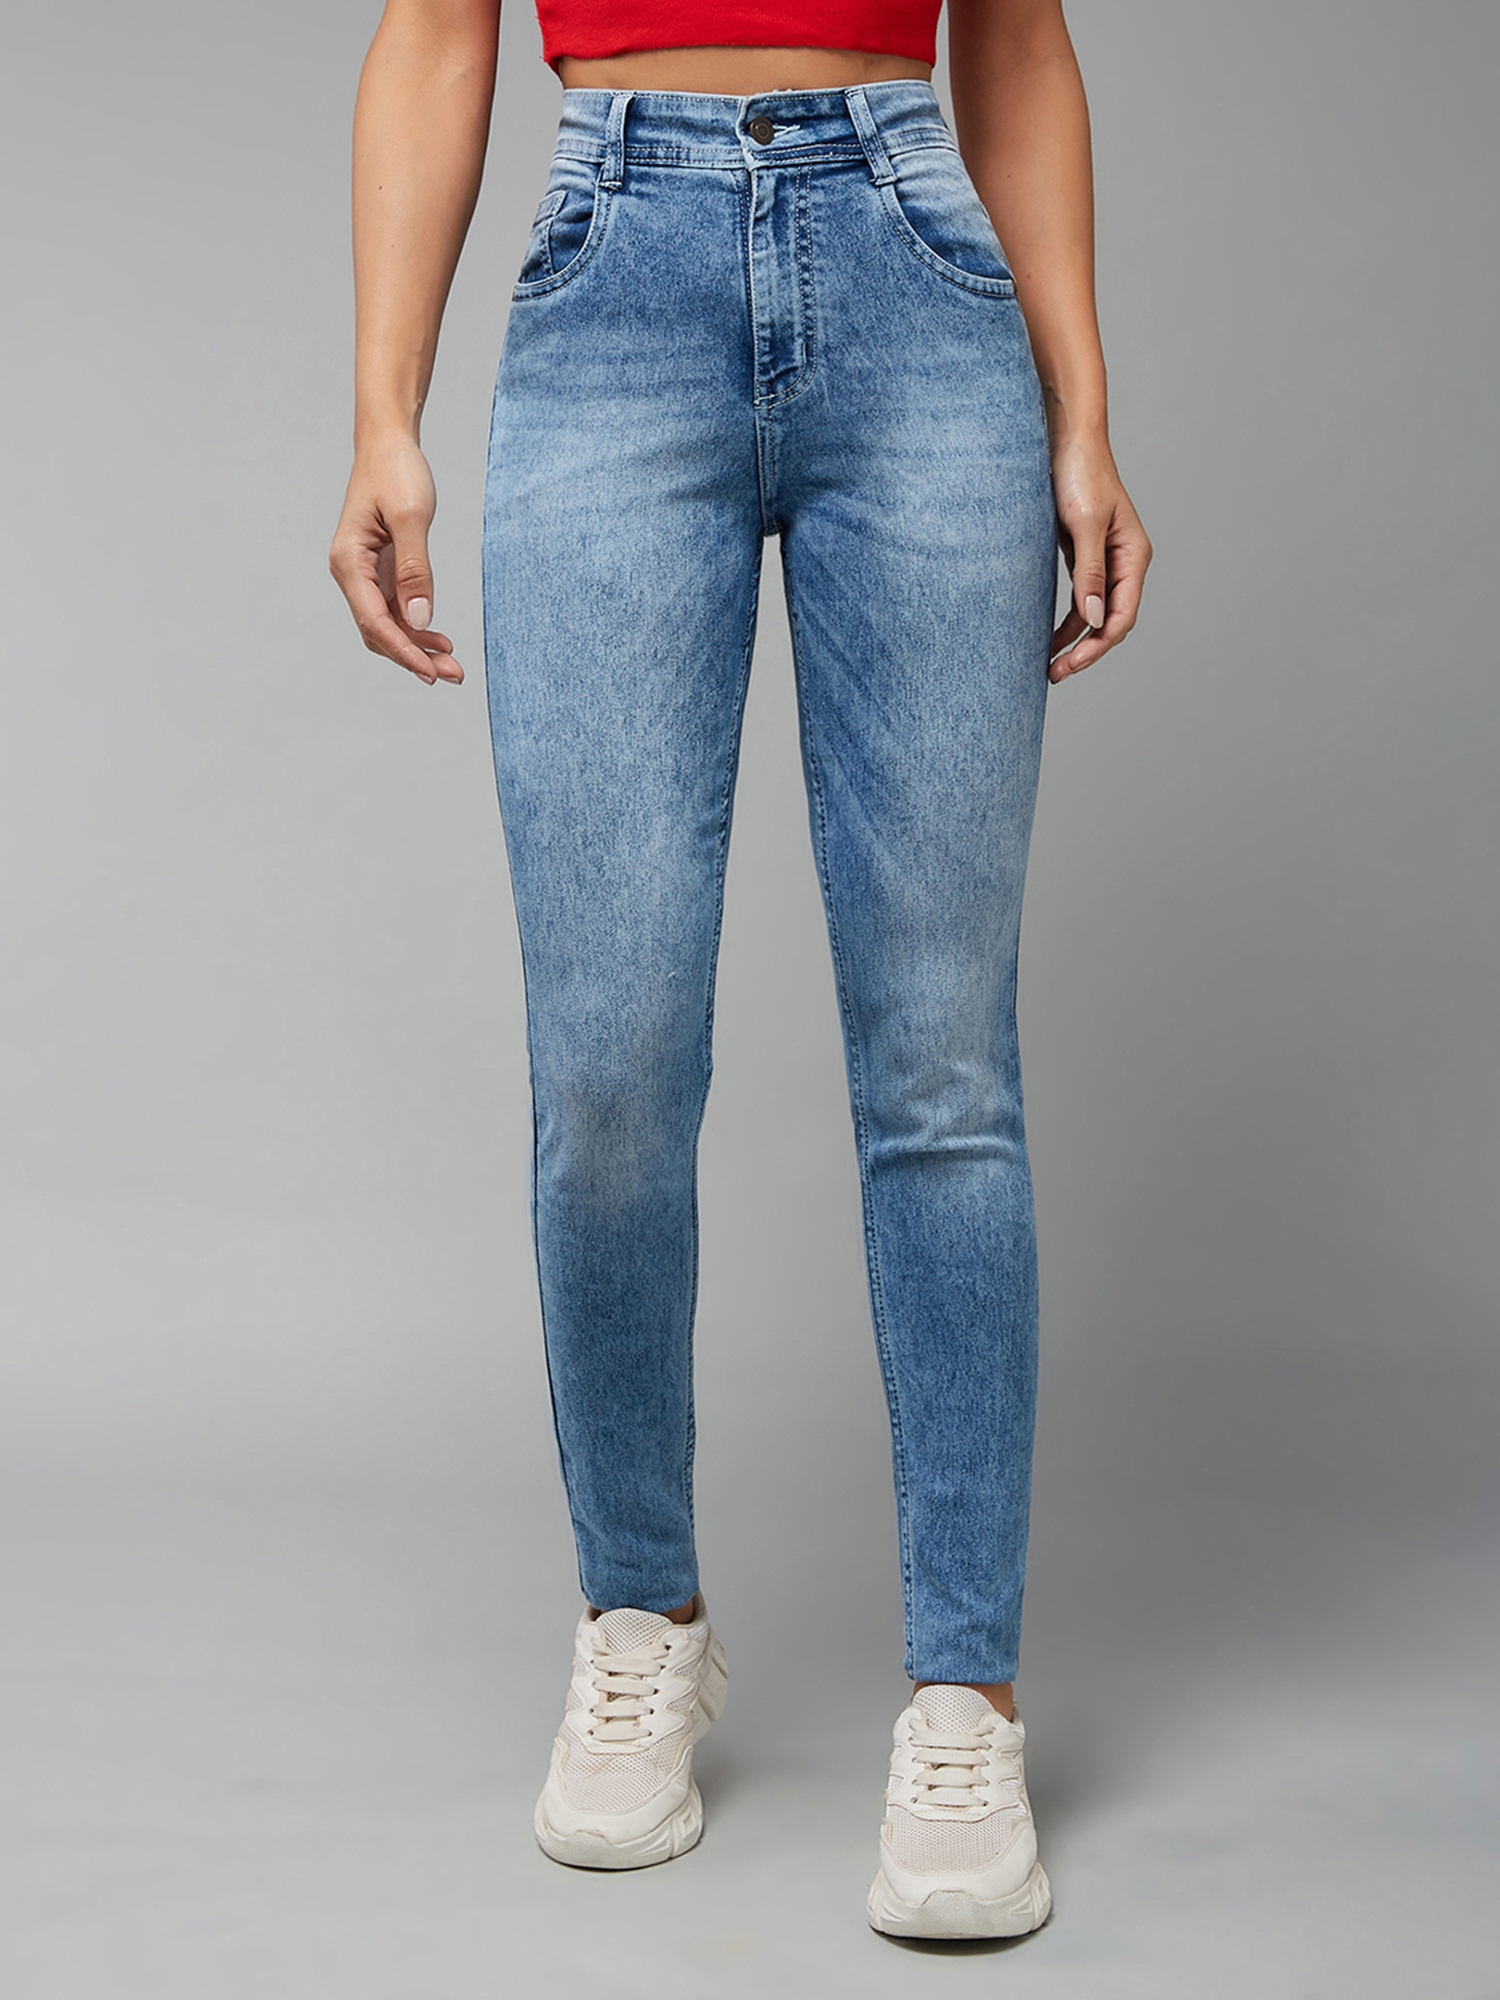 Regular Plain Women Light Blue Slim Fit Denim Jeans, Button, Mid Rise at Rs  285/piece in New Delhi